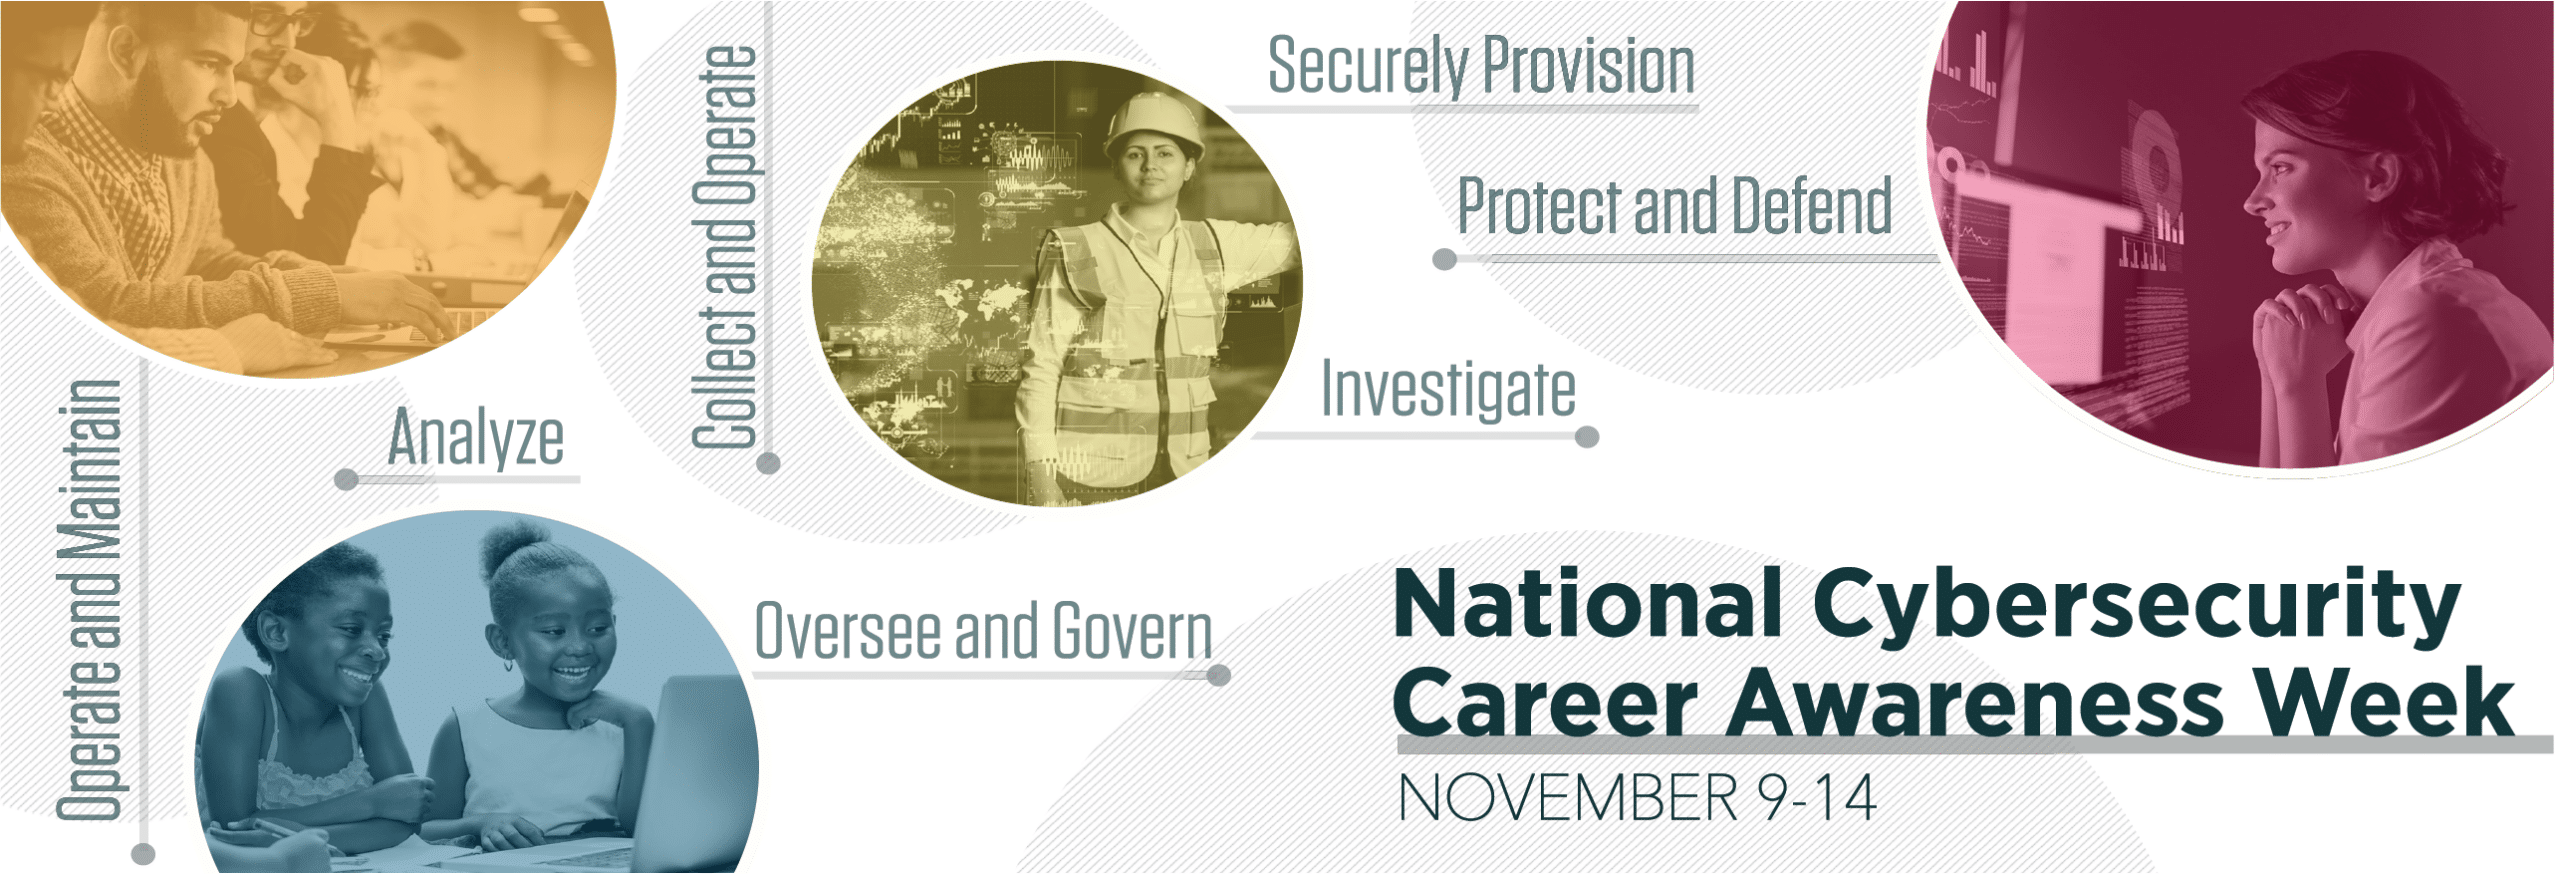 National Cybersecurity Career Awareness Week | November 9-14, 2020